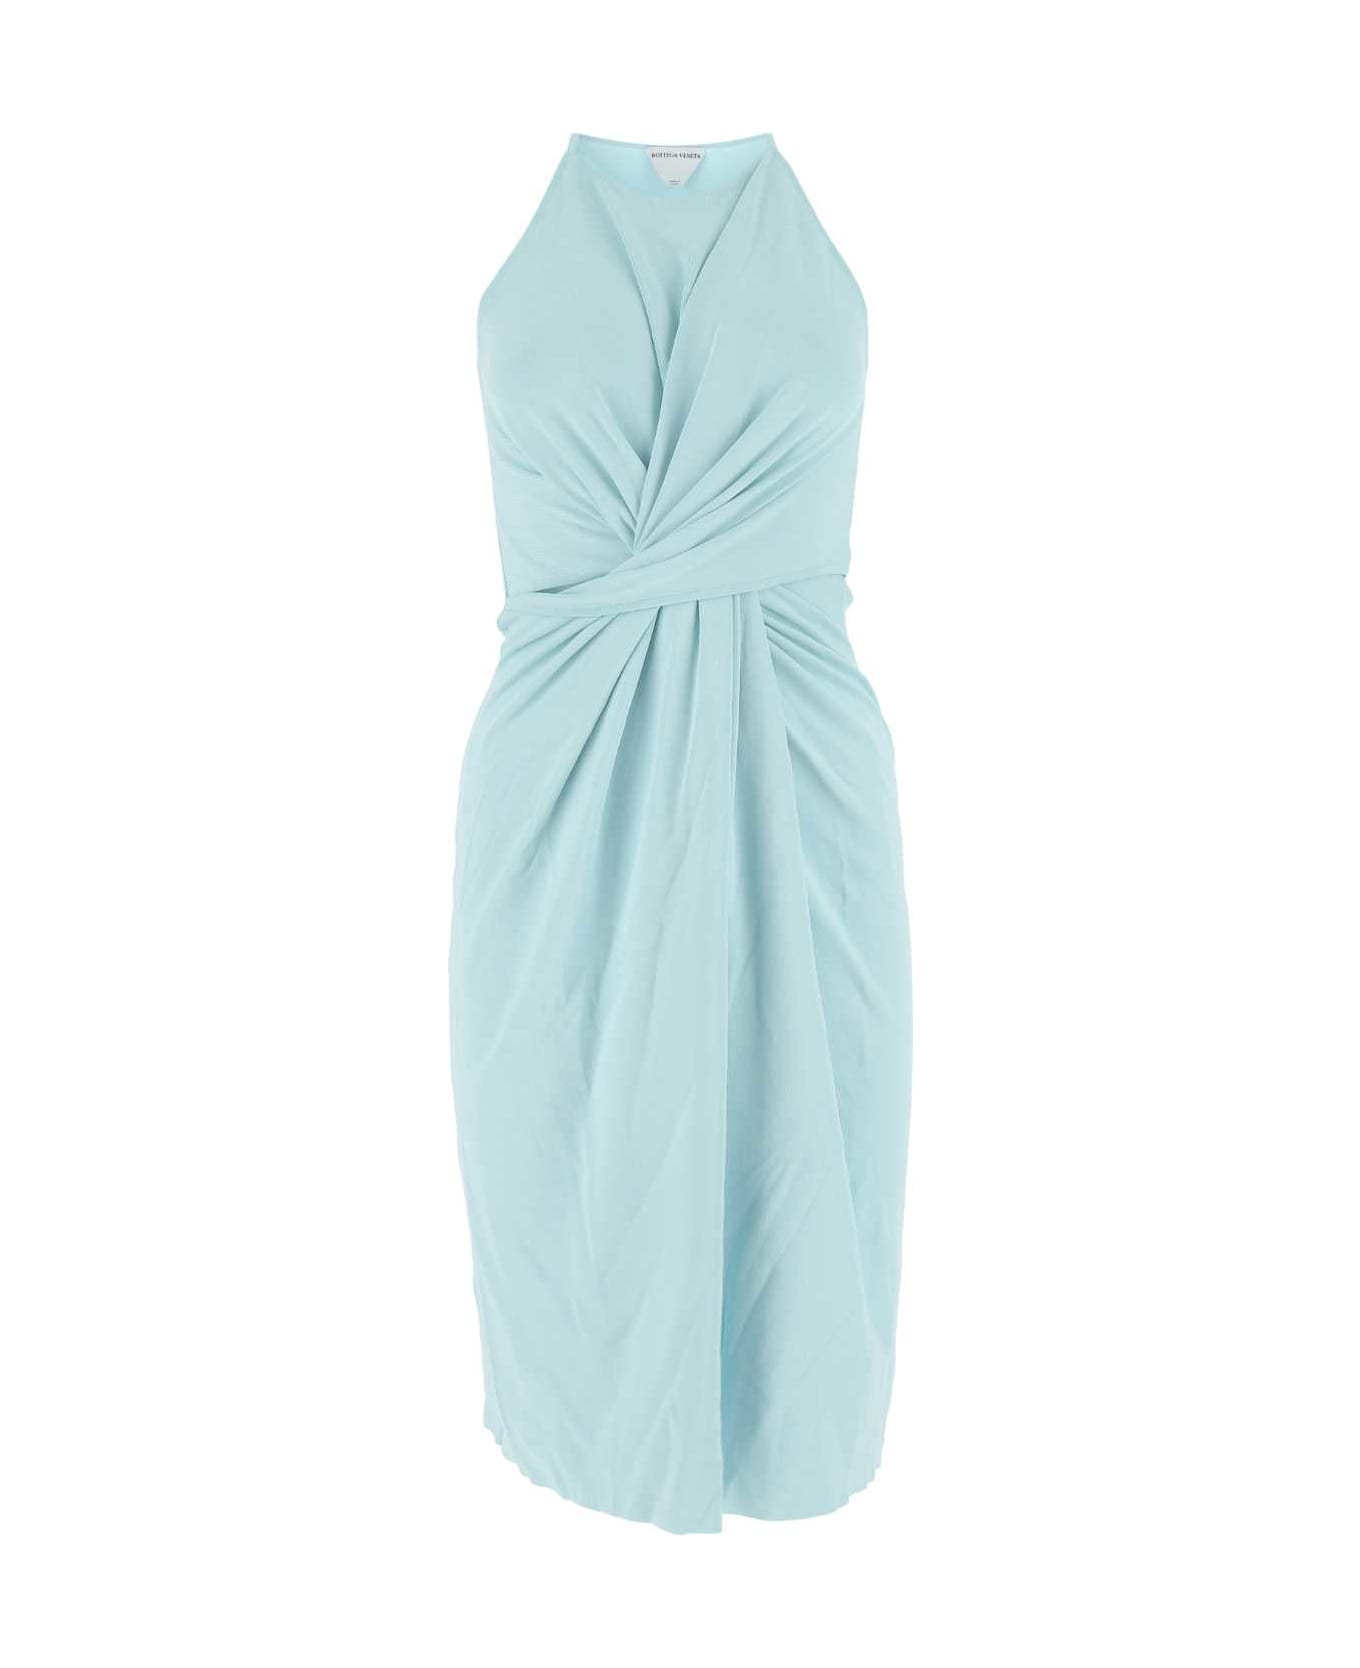 Bottega Veneta Pastel Light Blue Stretch Viscose Blend Dress - 8955